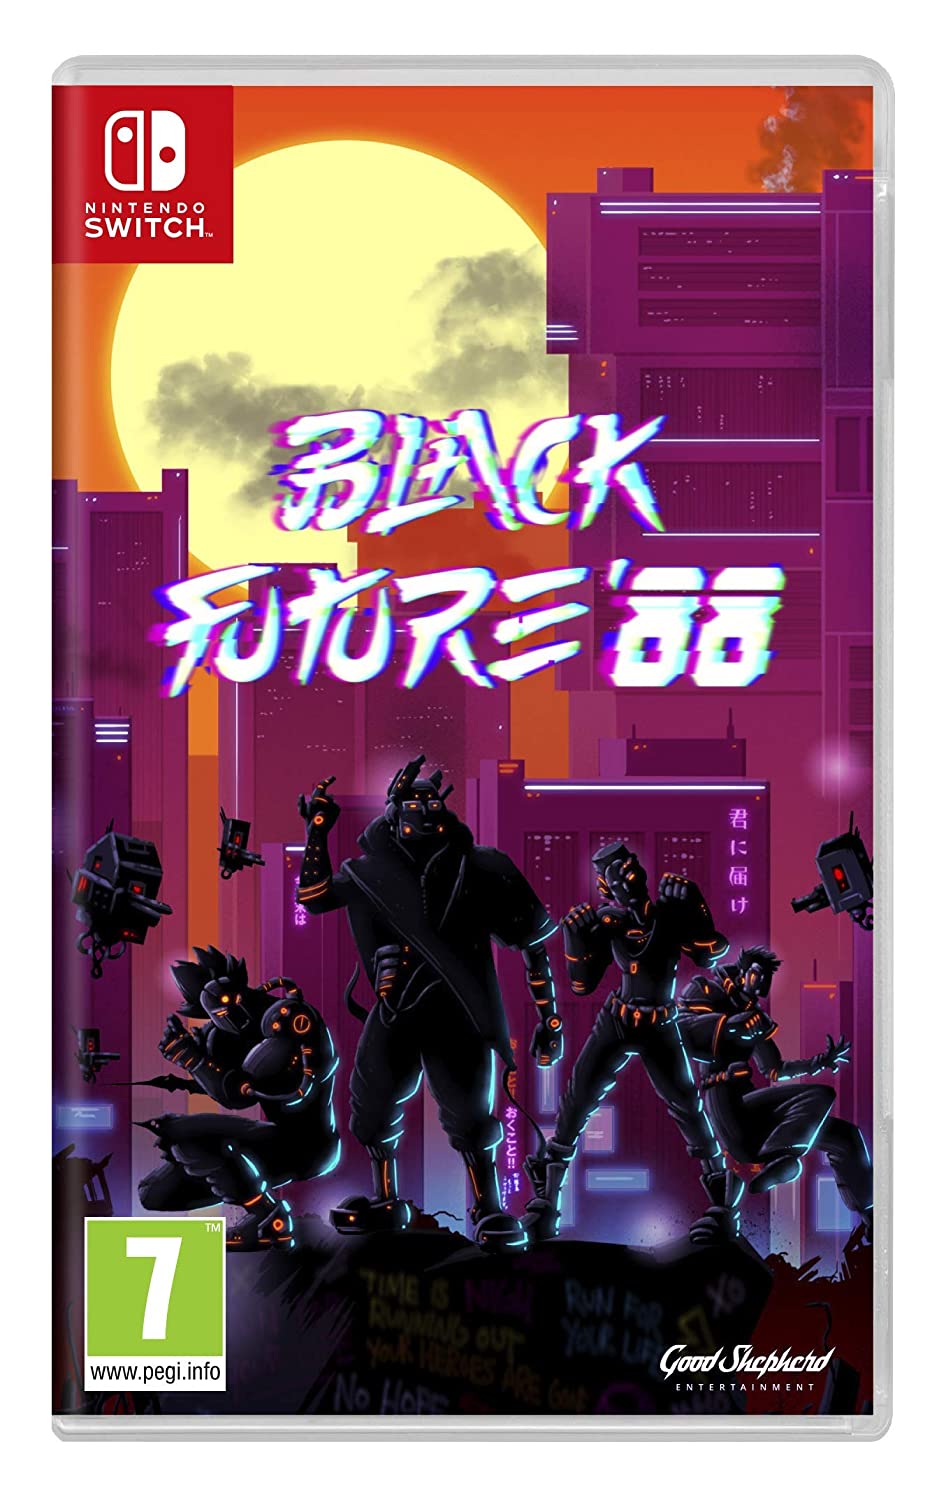 Игра Black Future '88 для Nintendo Switch